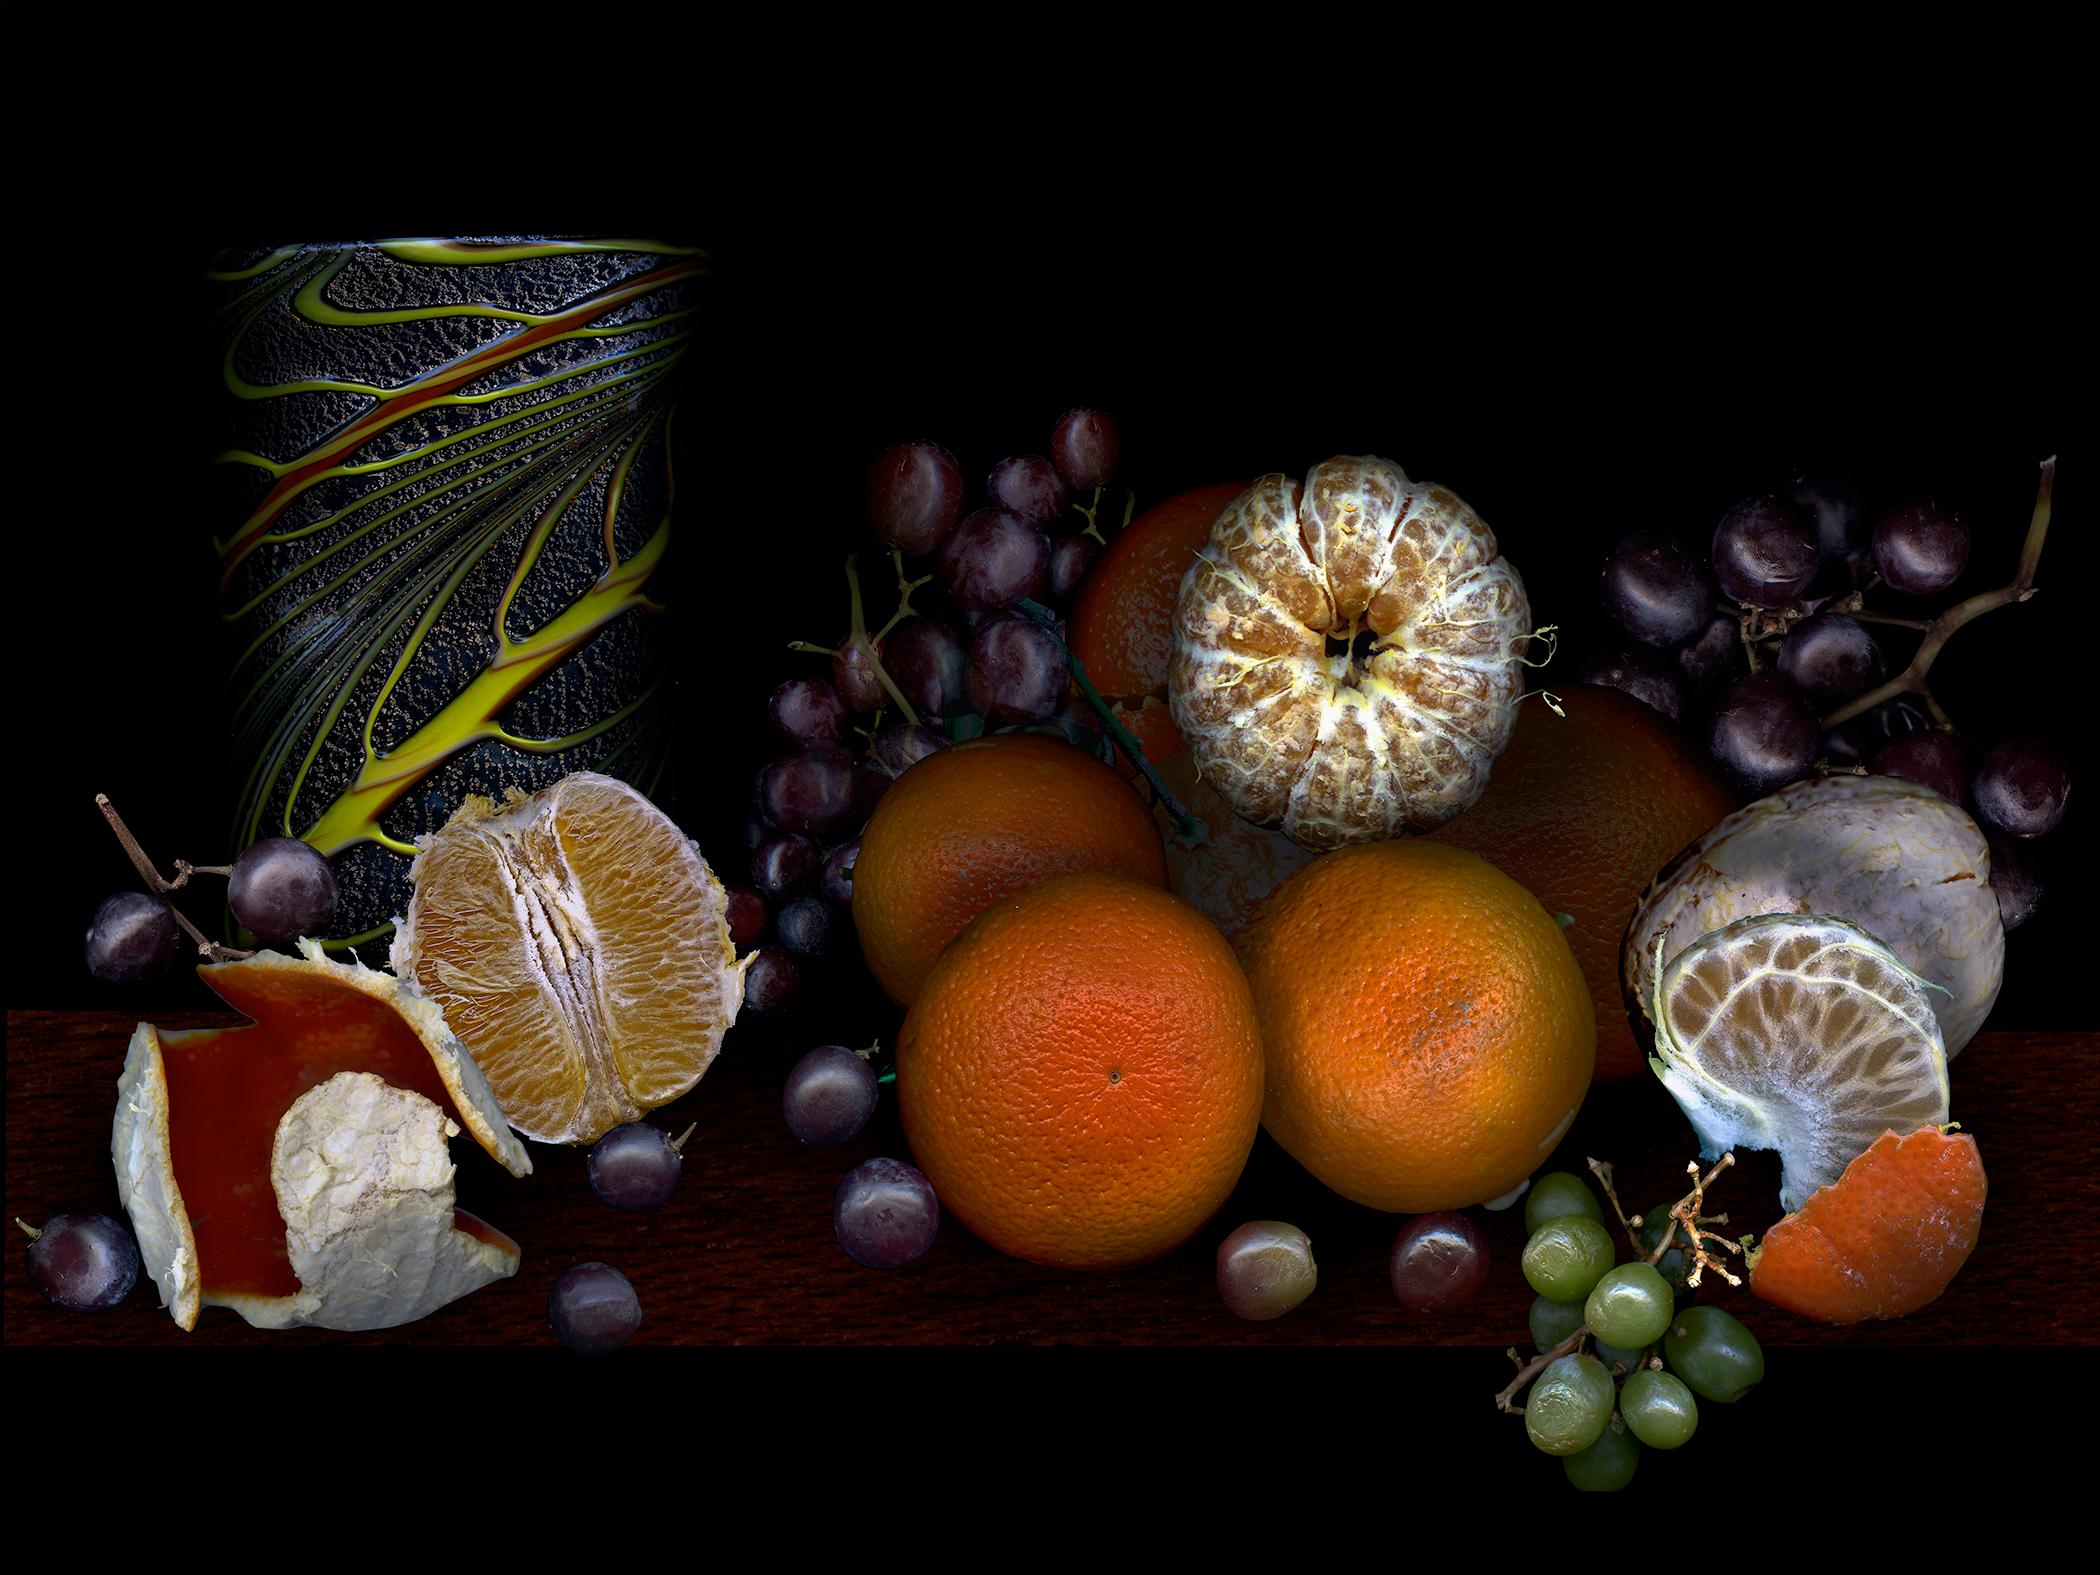 Zoltan Gerliczki Still-Life Photograph - Fruits from my garden #3. Fruits. Digital Collage Color Photograph